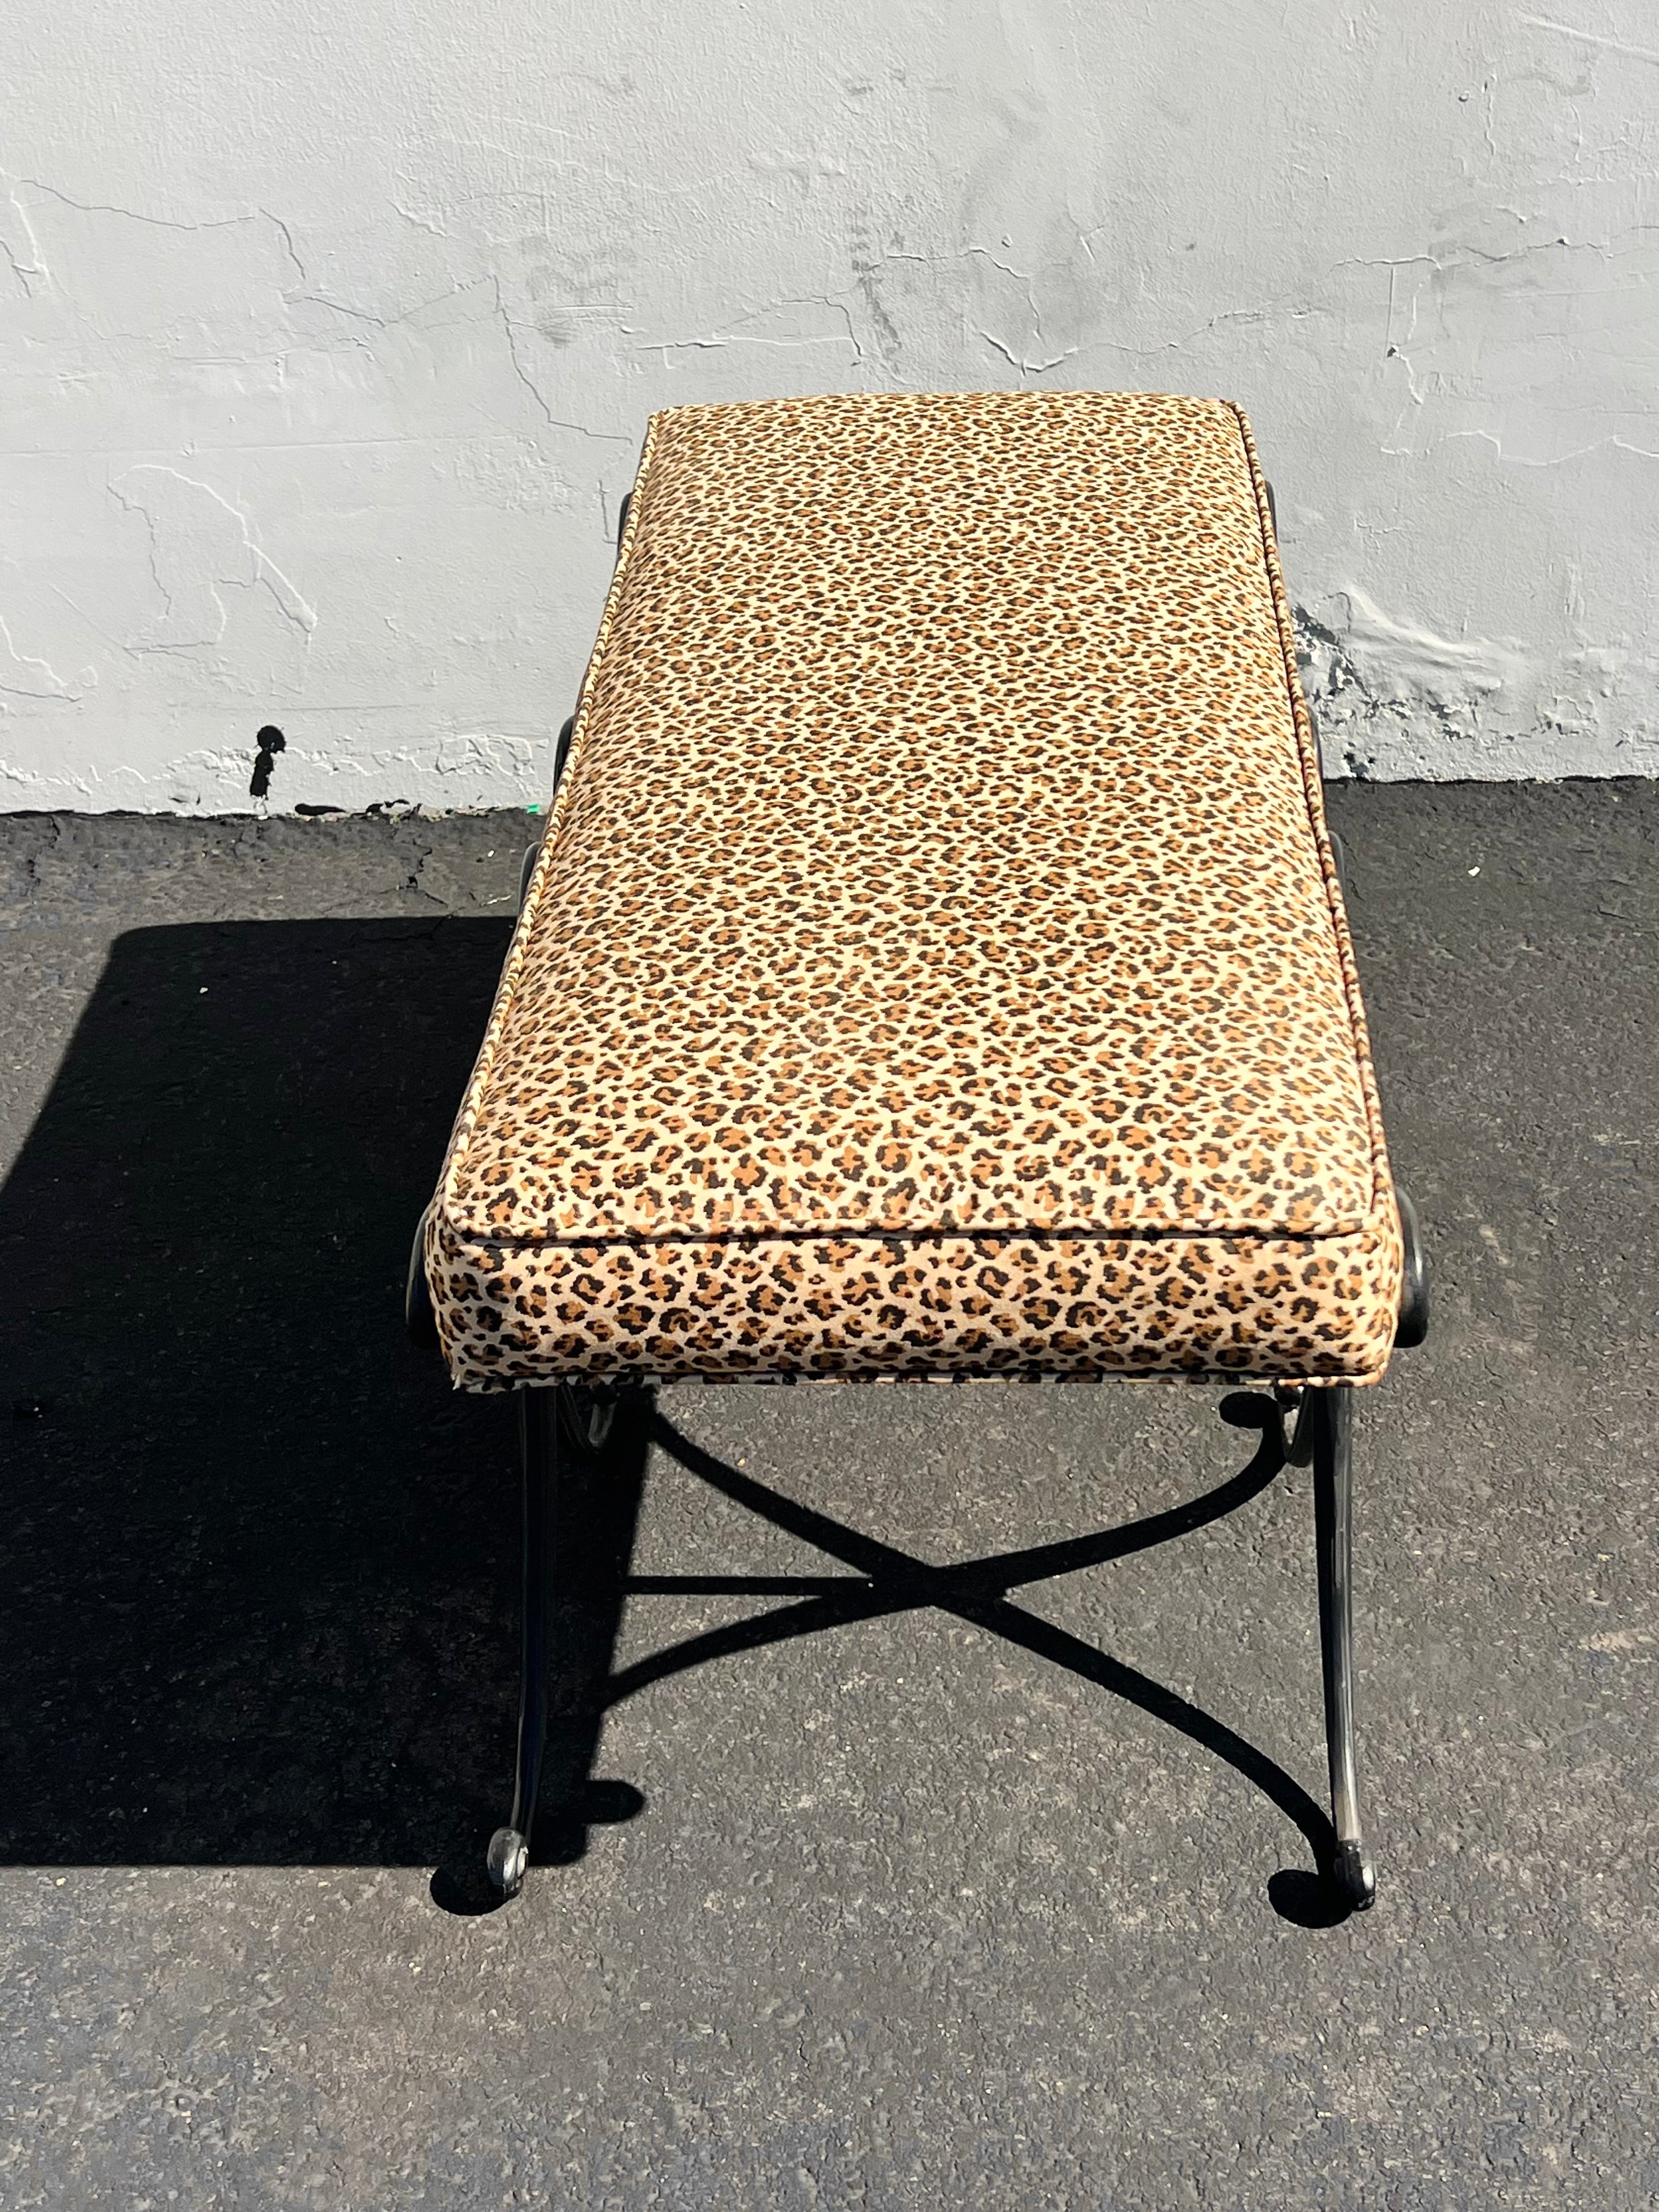 Cheetah Print Wrought Iron Bench (Vintage)